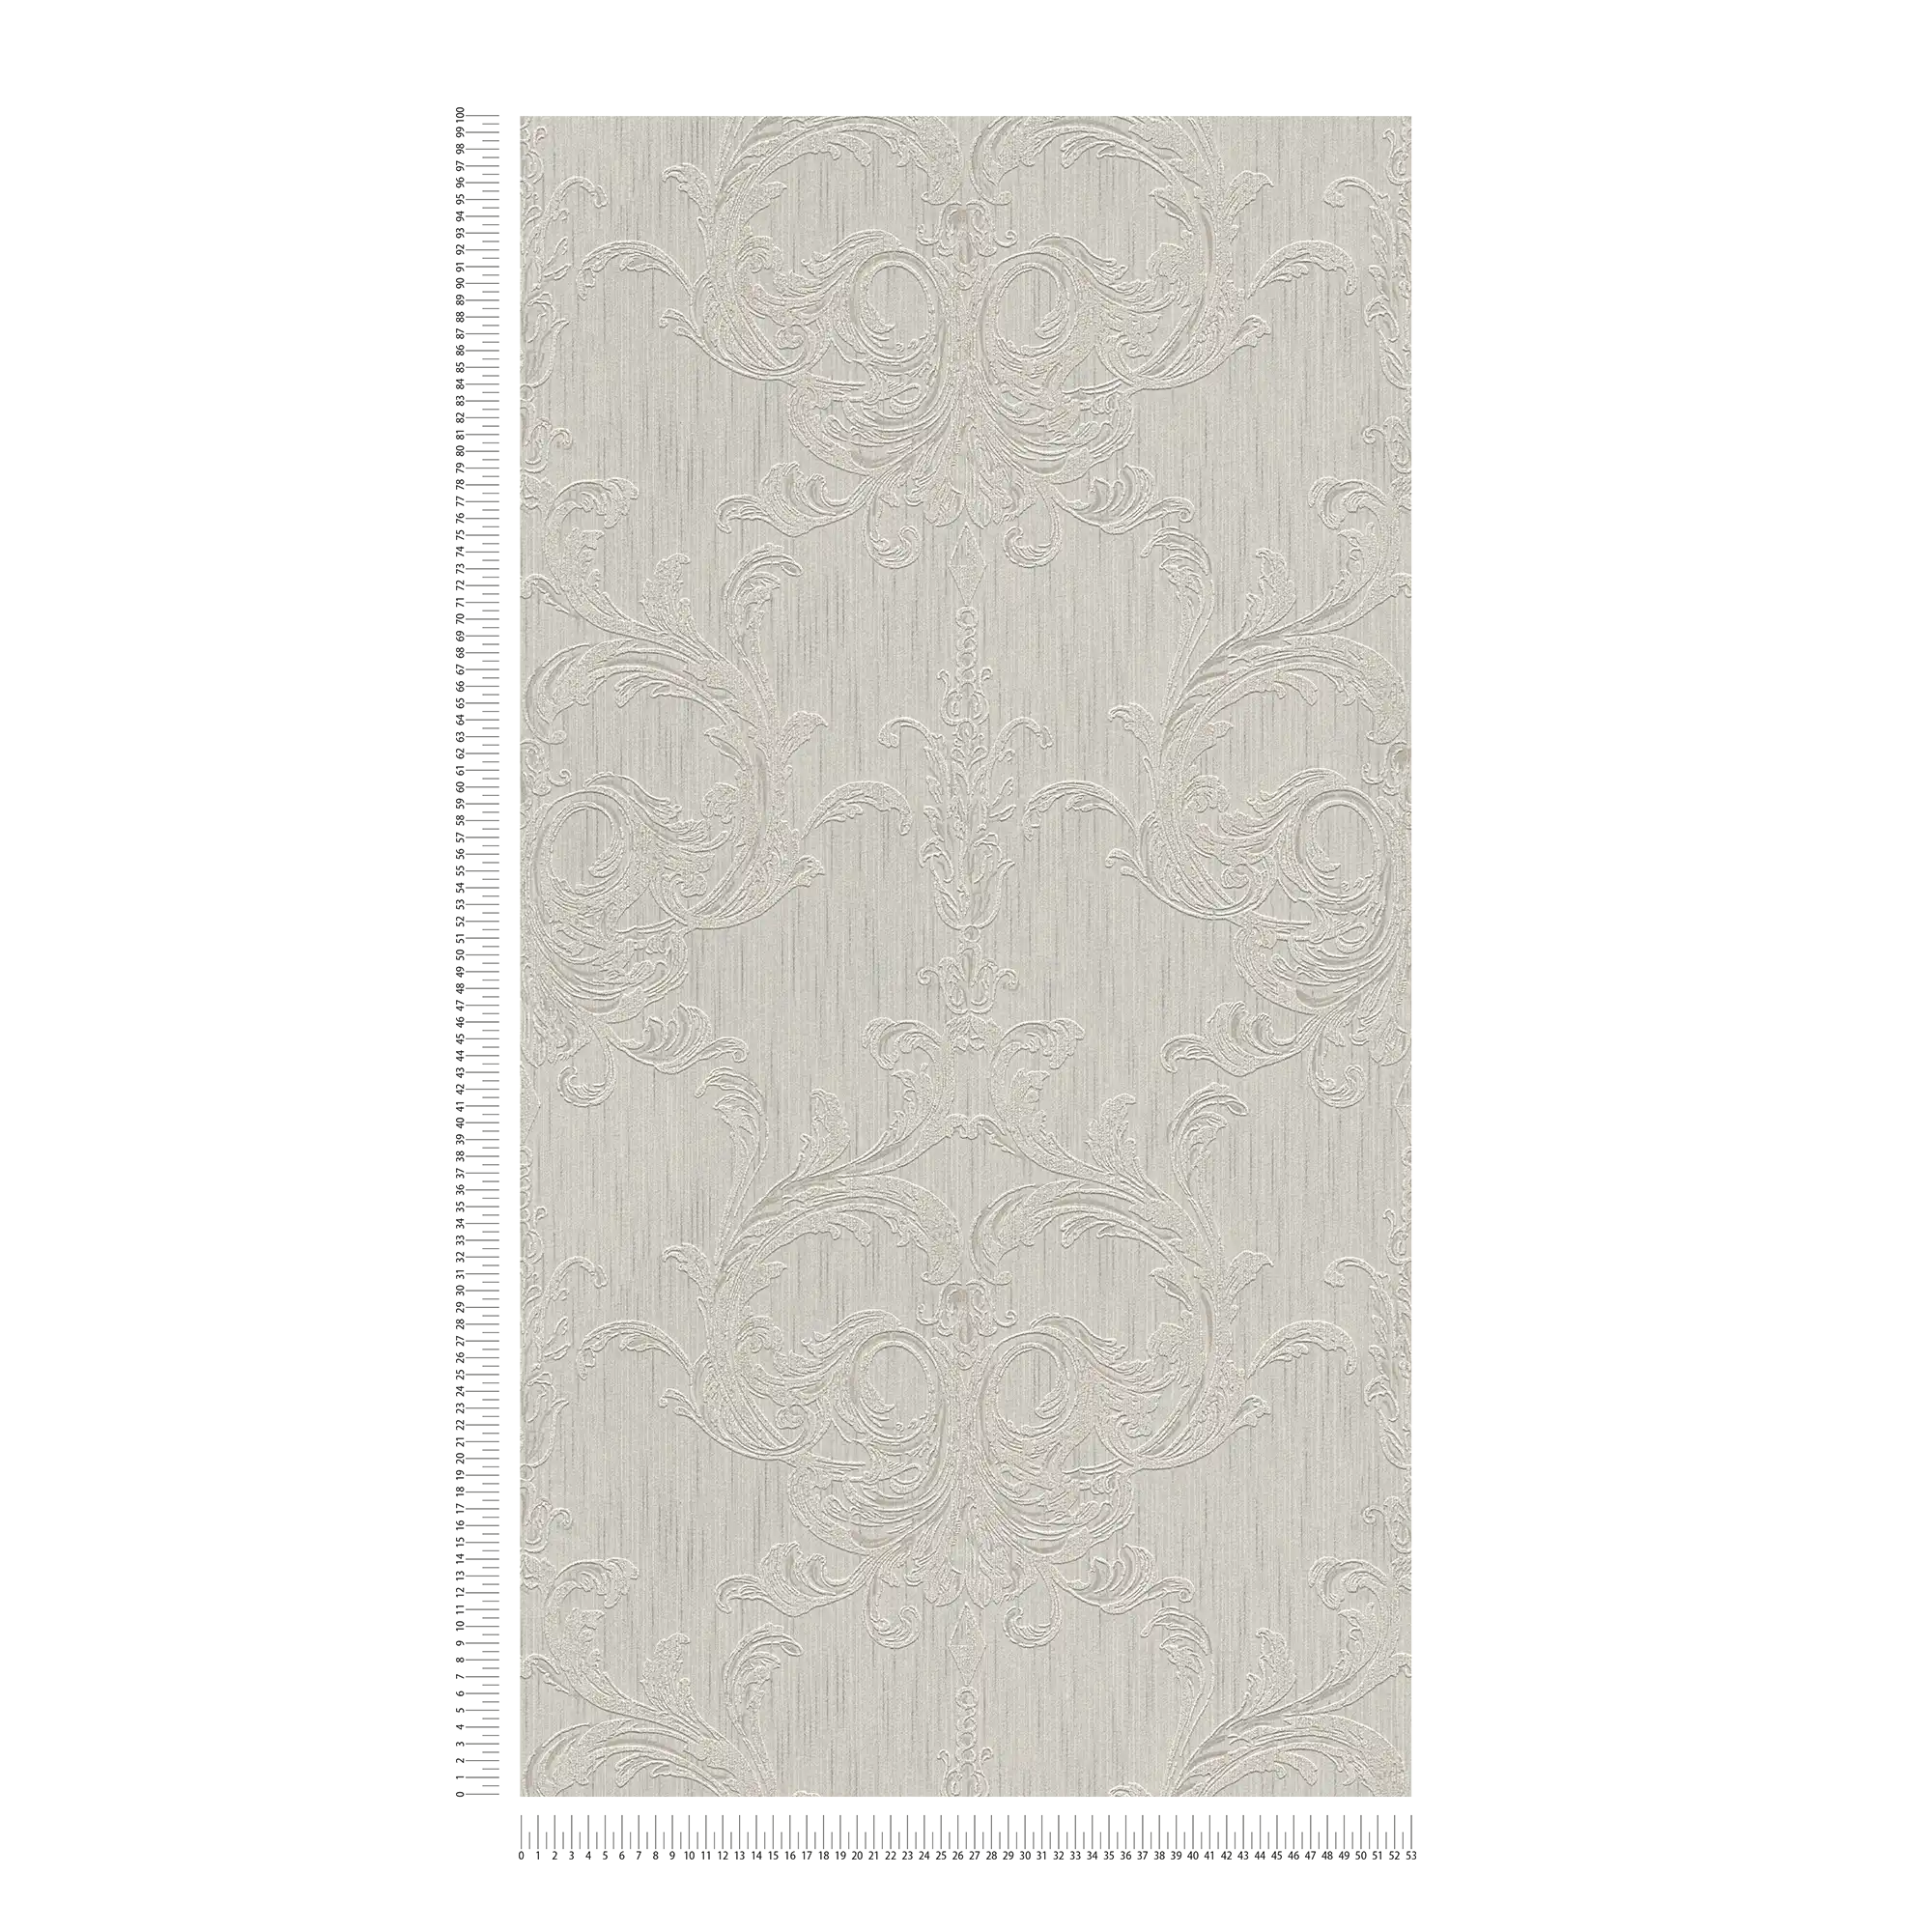             Filigree ornament wallpaper with textured pattern - beige
        